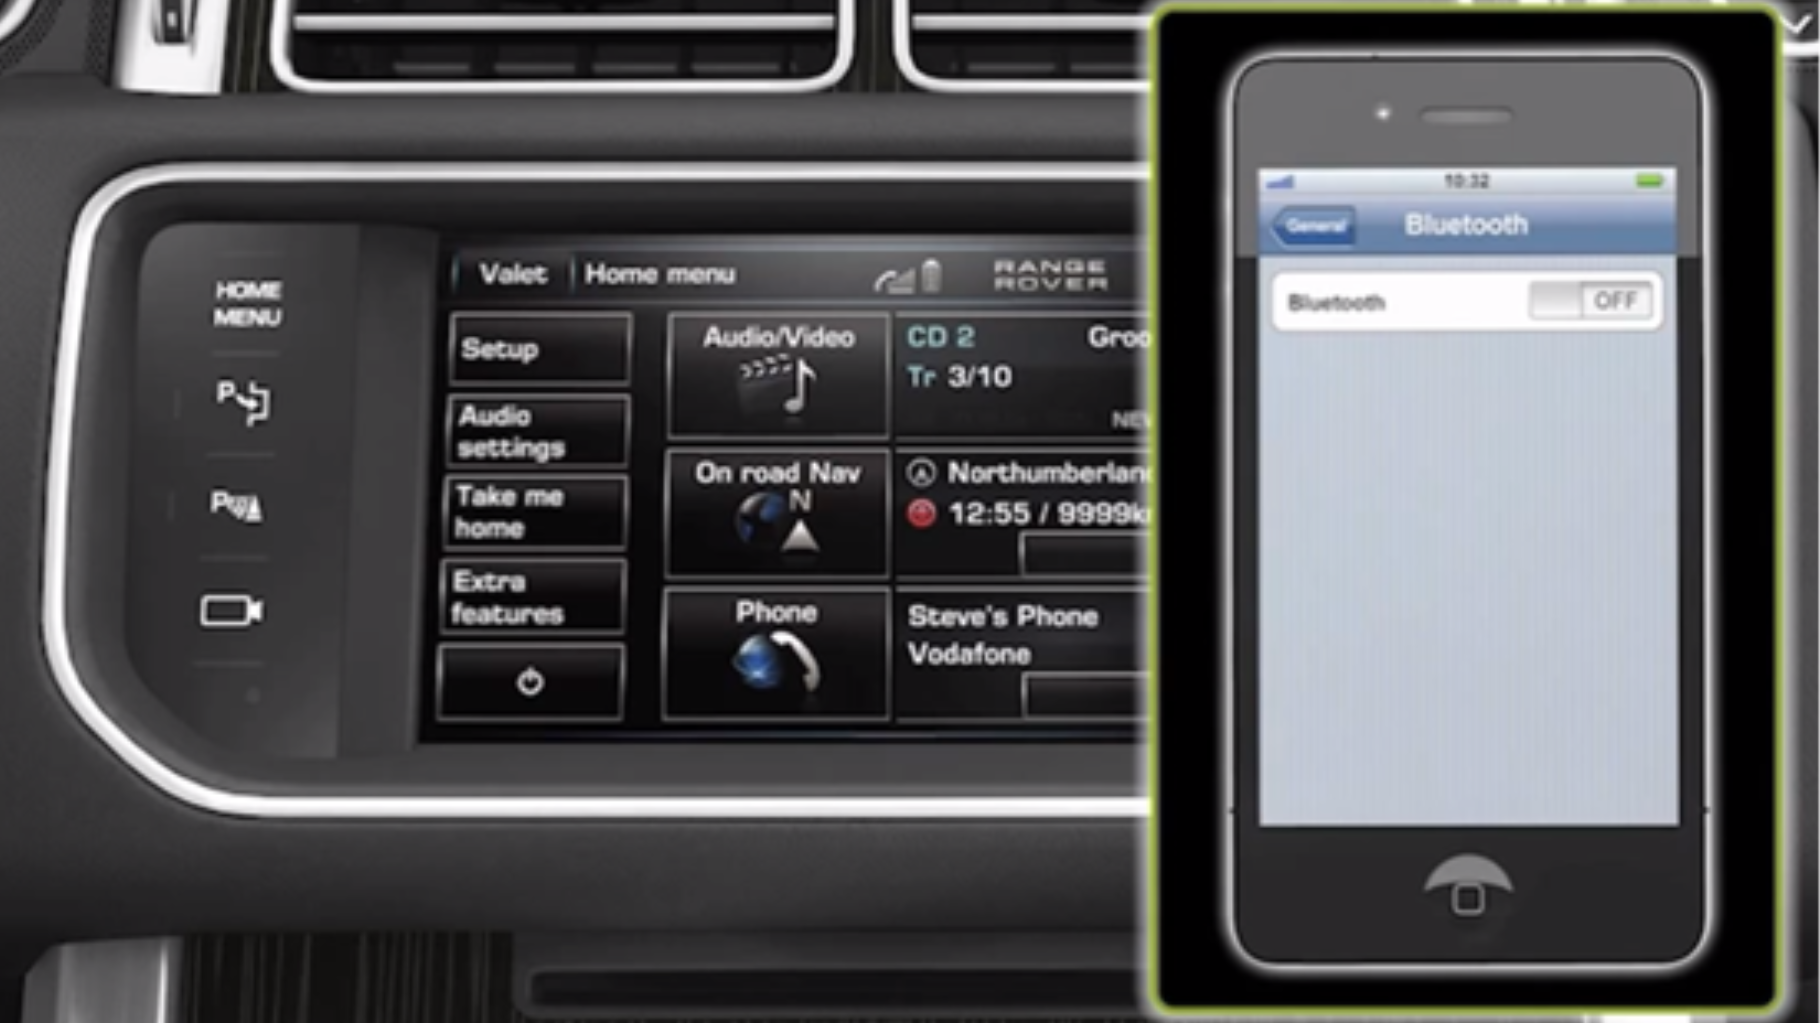 Range Rover Bluetooth Audio Streaming